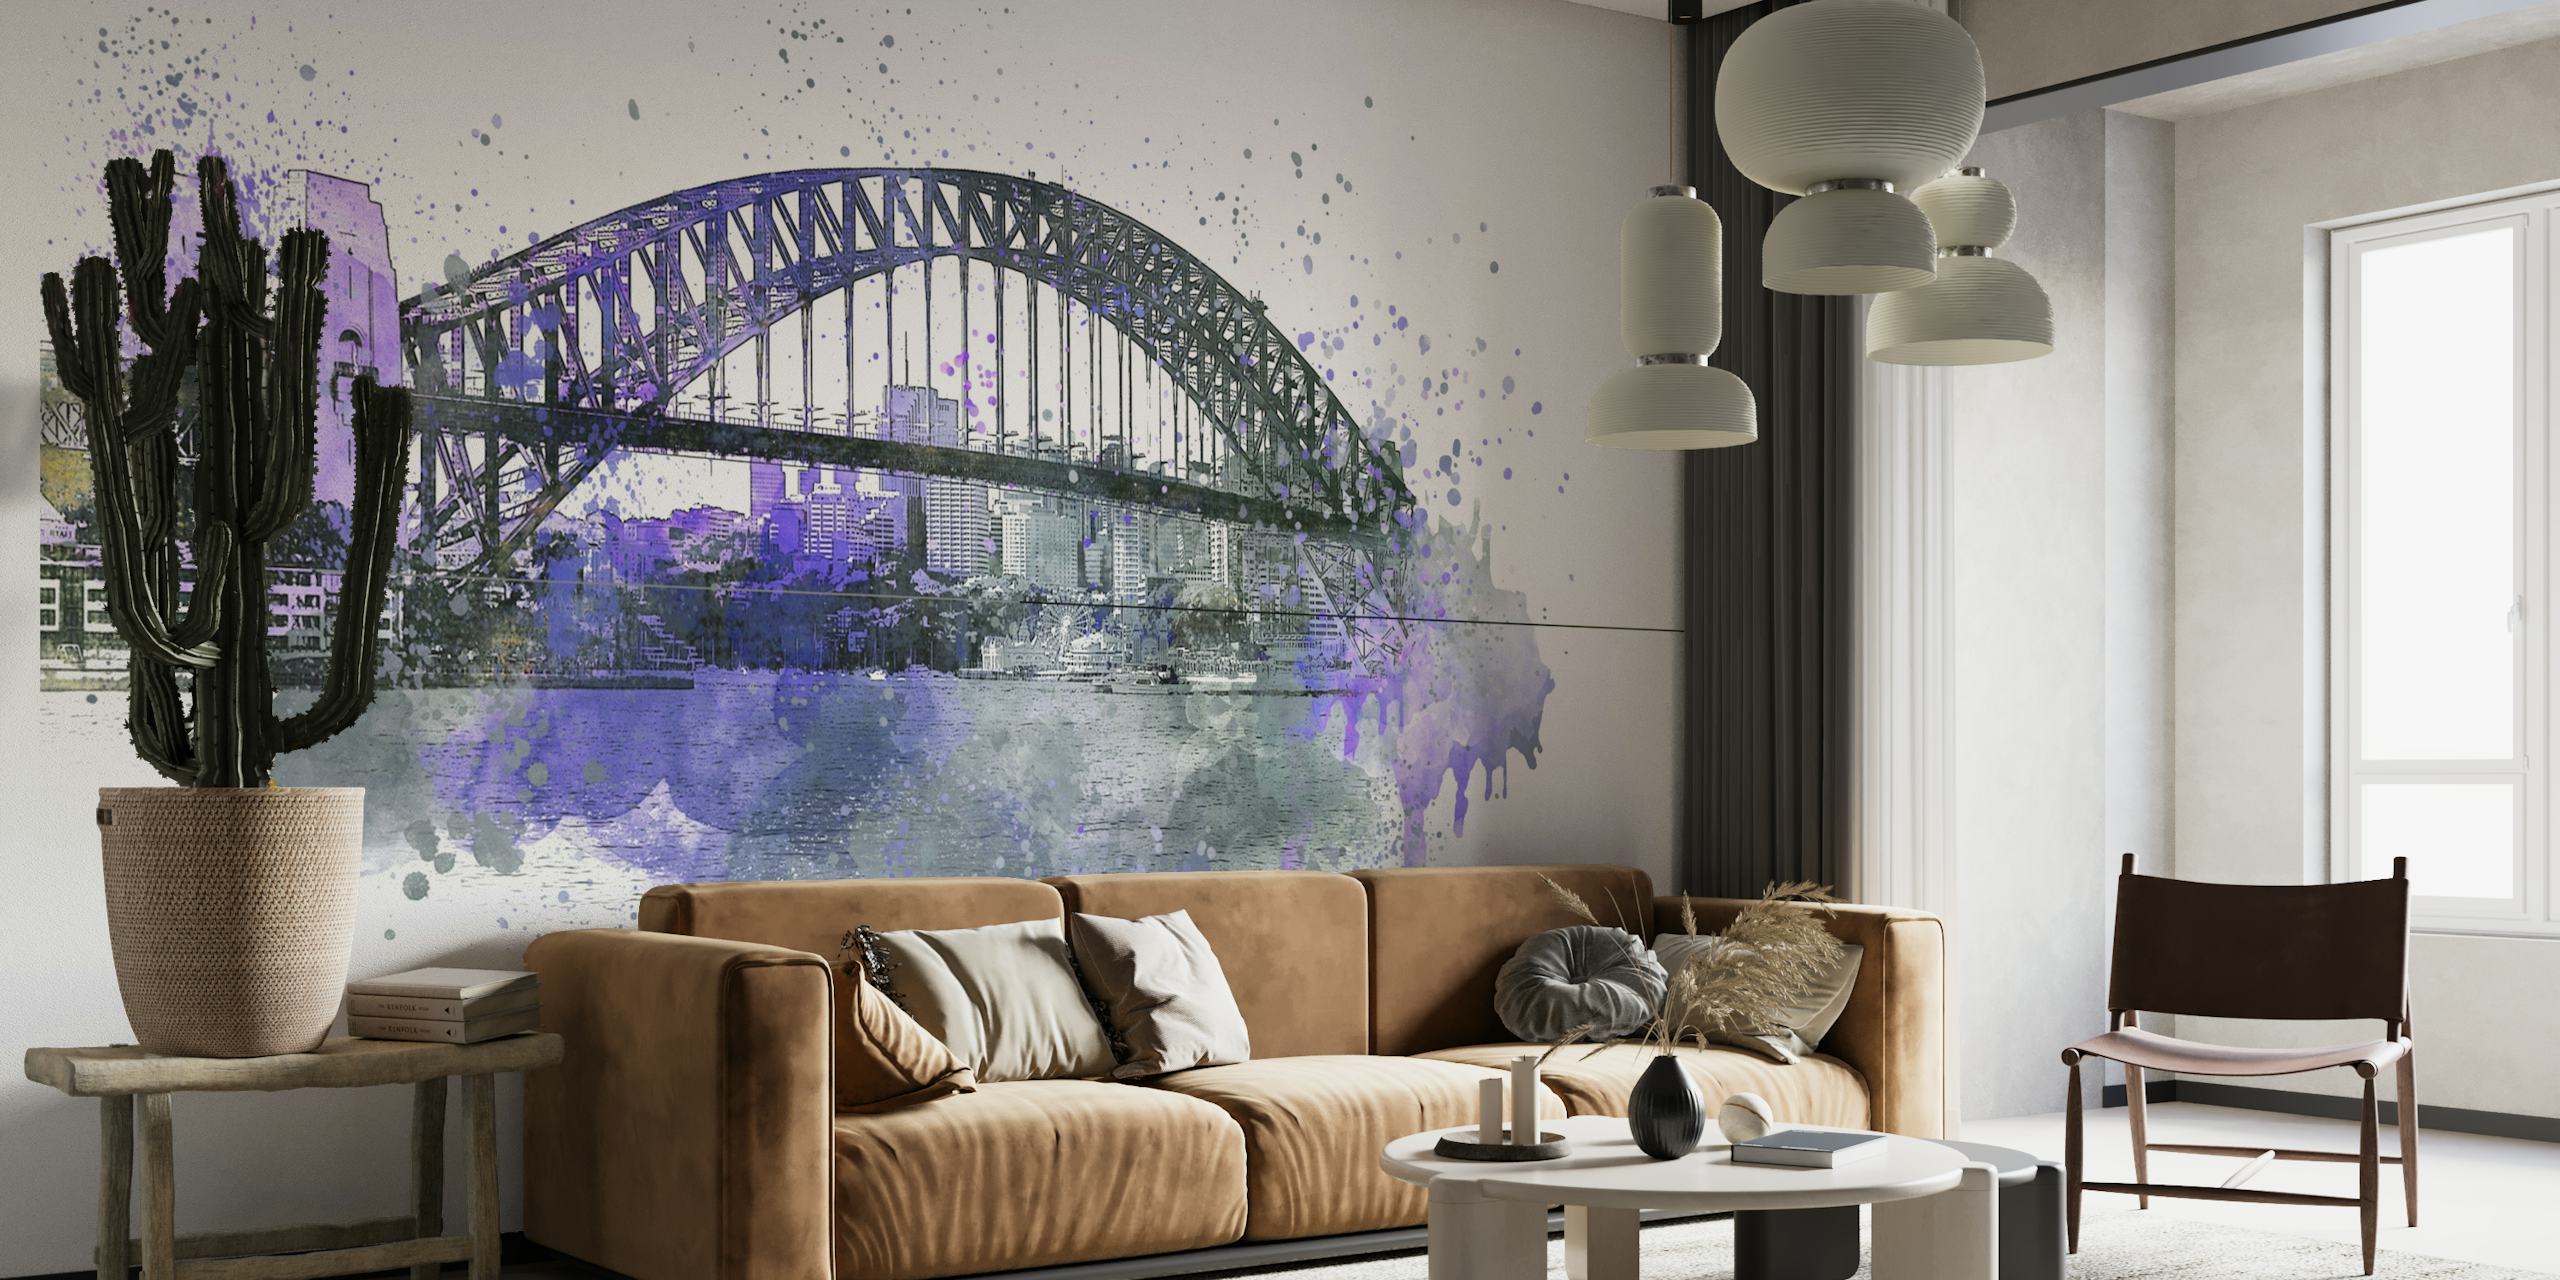 Artistic watercolor mural representation of Sydney Harbor Bridge in purple and gray tones